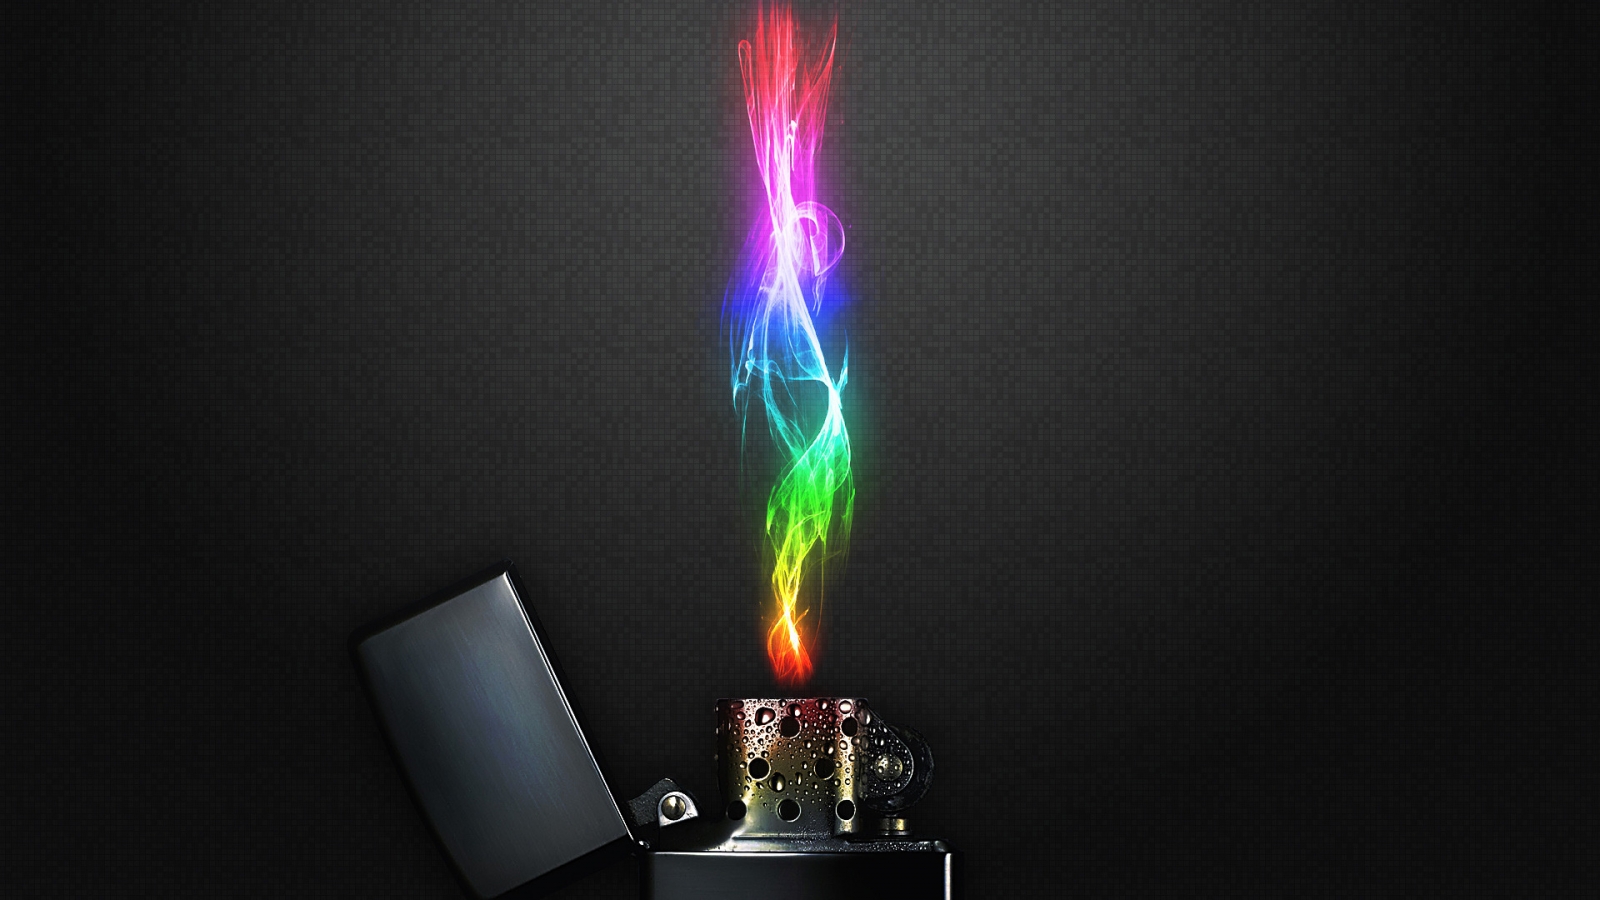 Rainbow Lighter for 1600 x 900 HDTV resolution